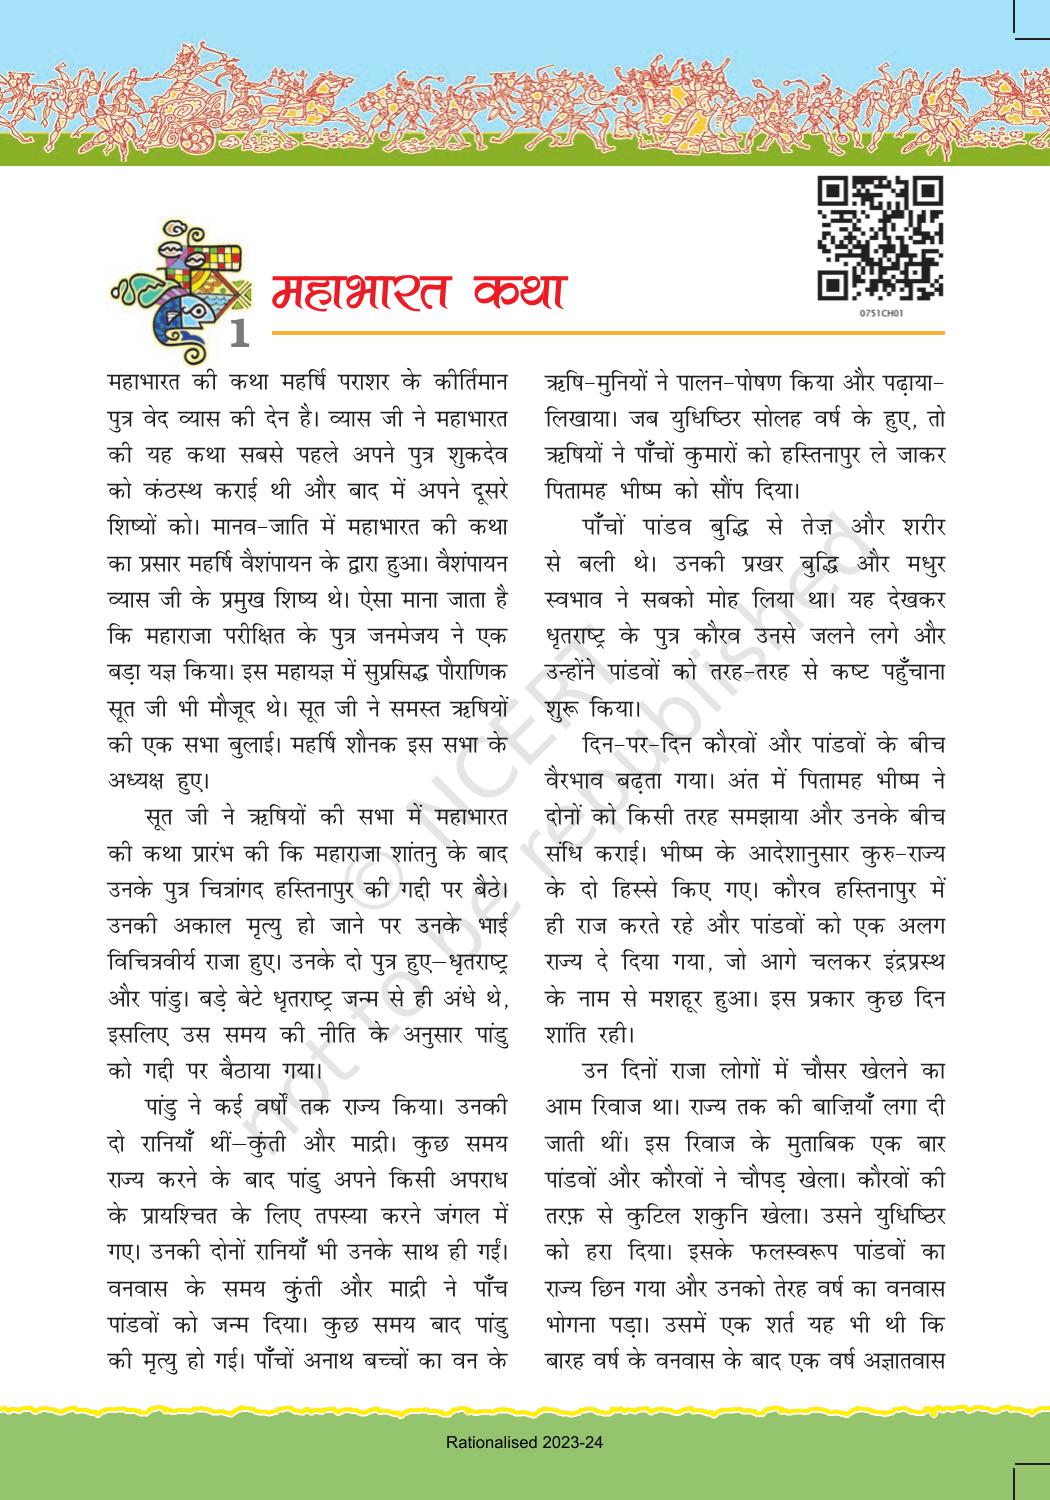 NCERT Book for Class 7 Hindi: Chapter 1-बाल महाभारत कथा - Page 1